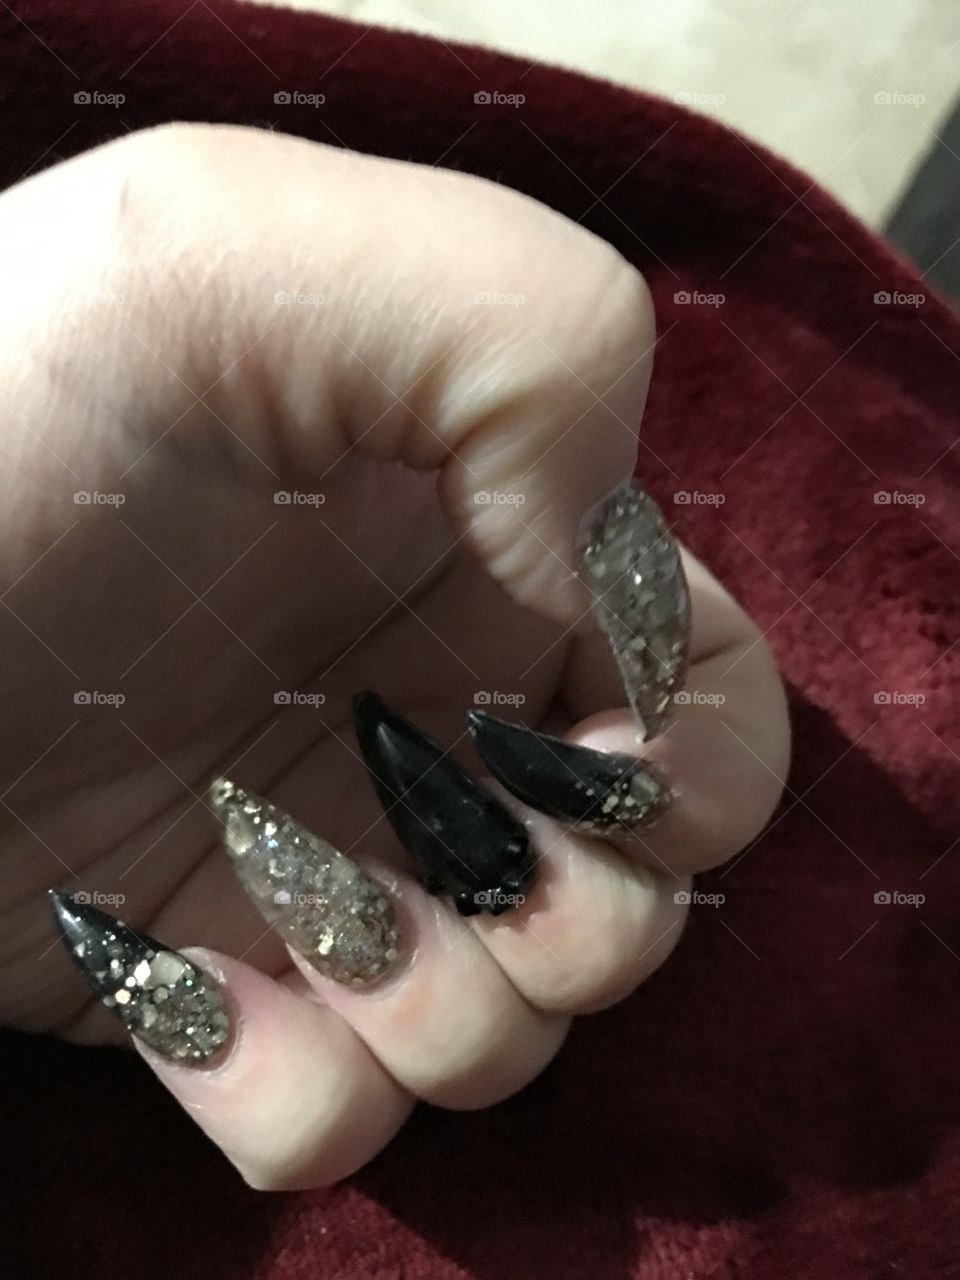 Nails salon manicure 